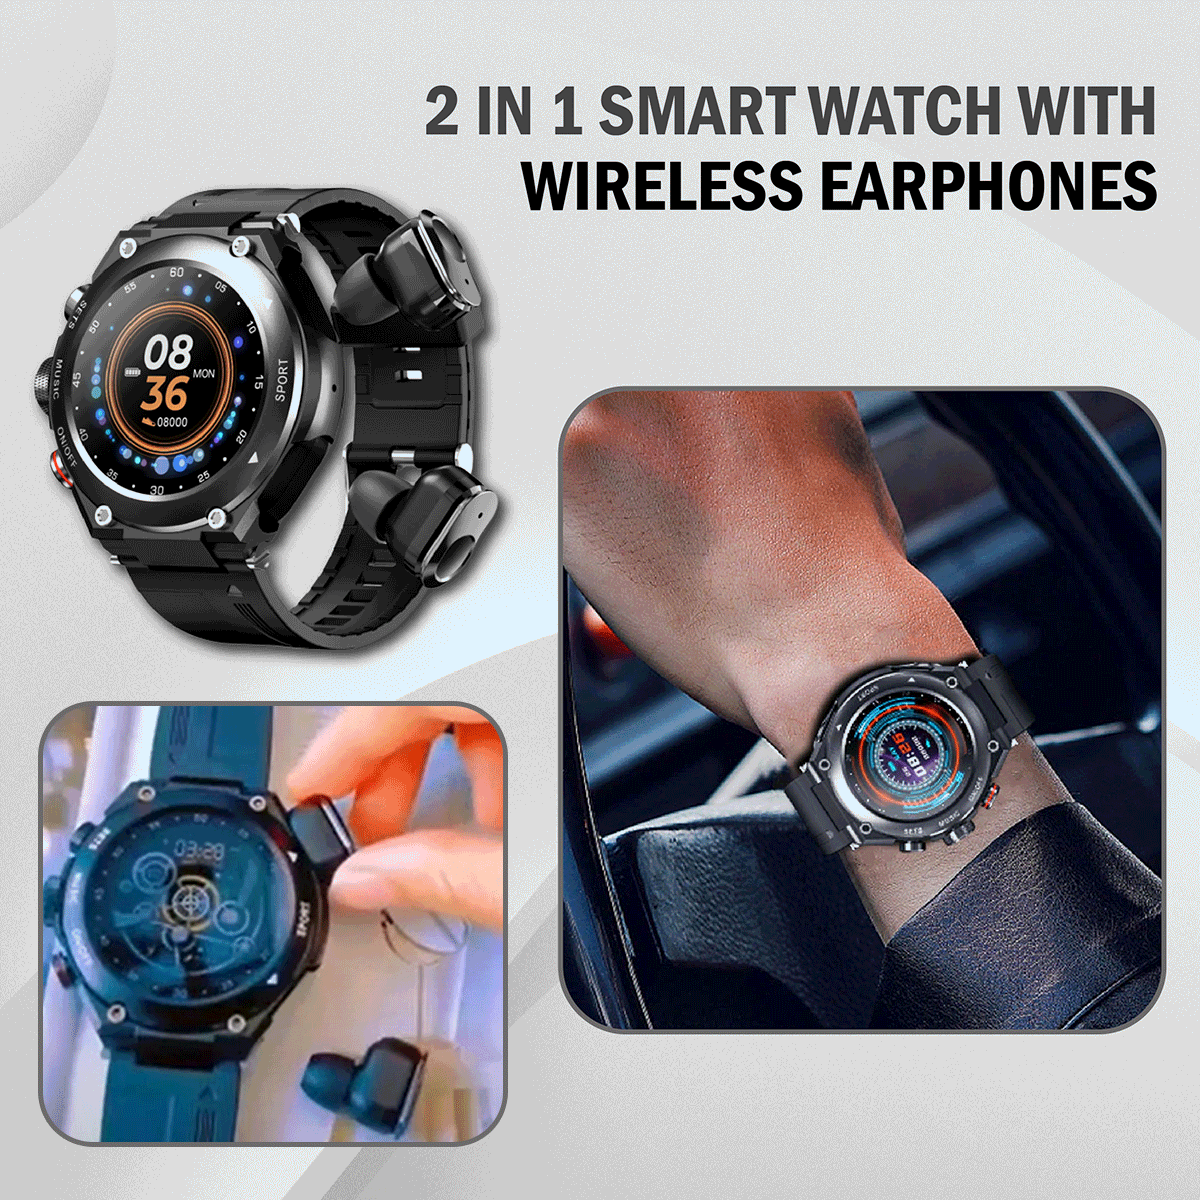 2 in 1 Smart Watch with Wireless Earphones